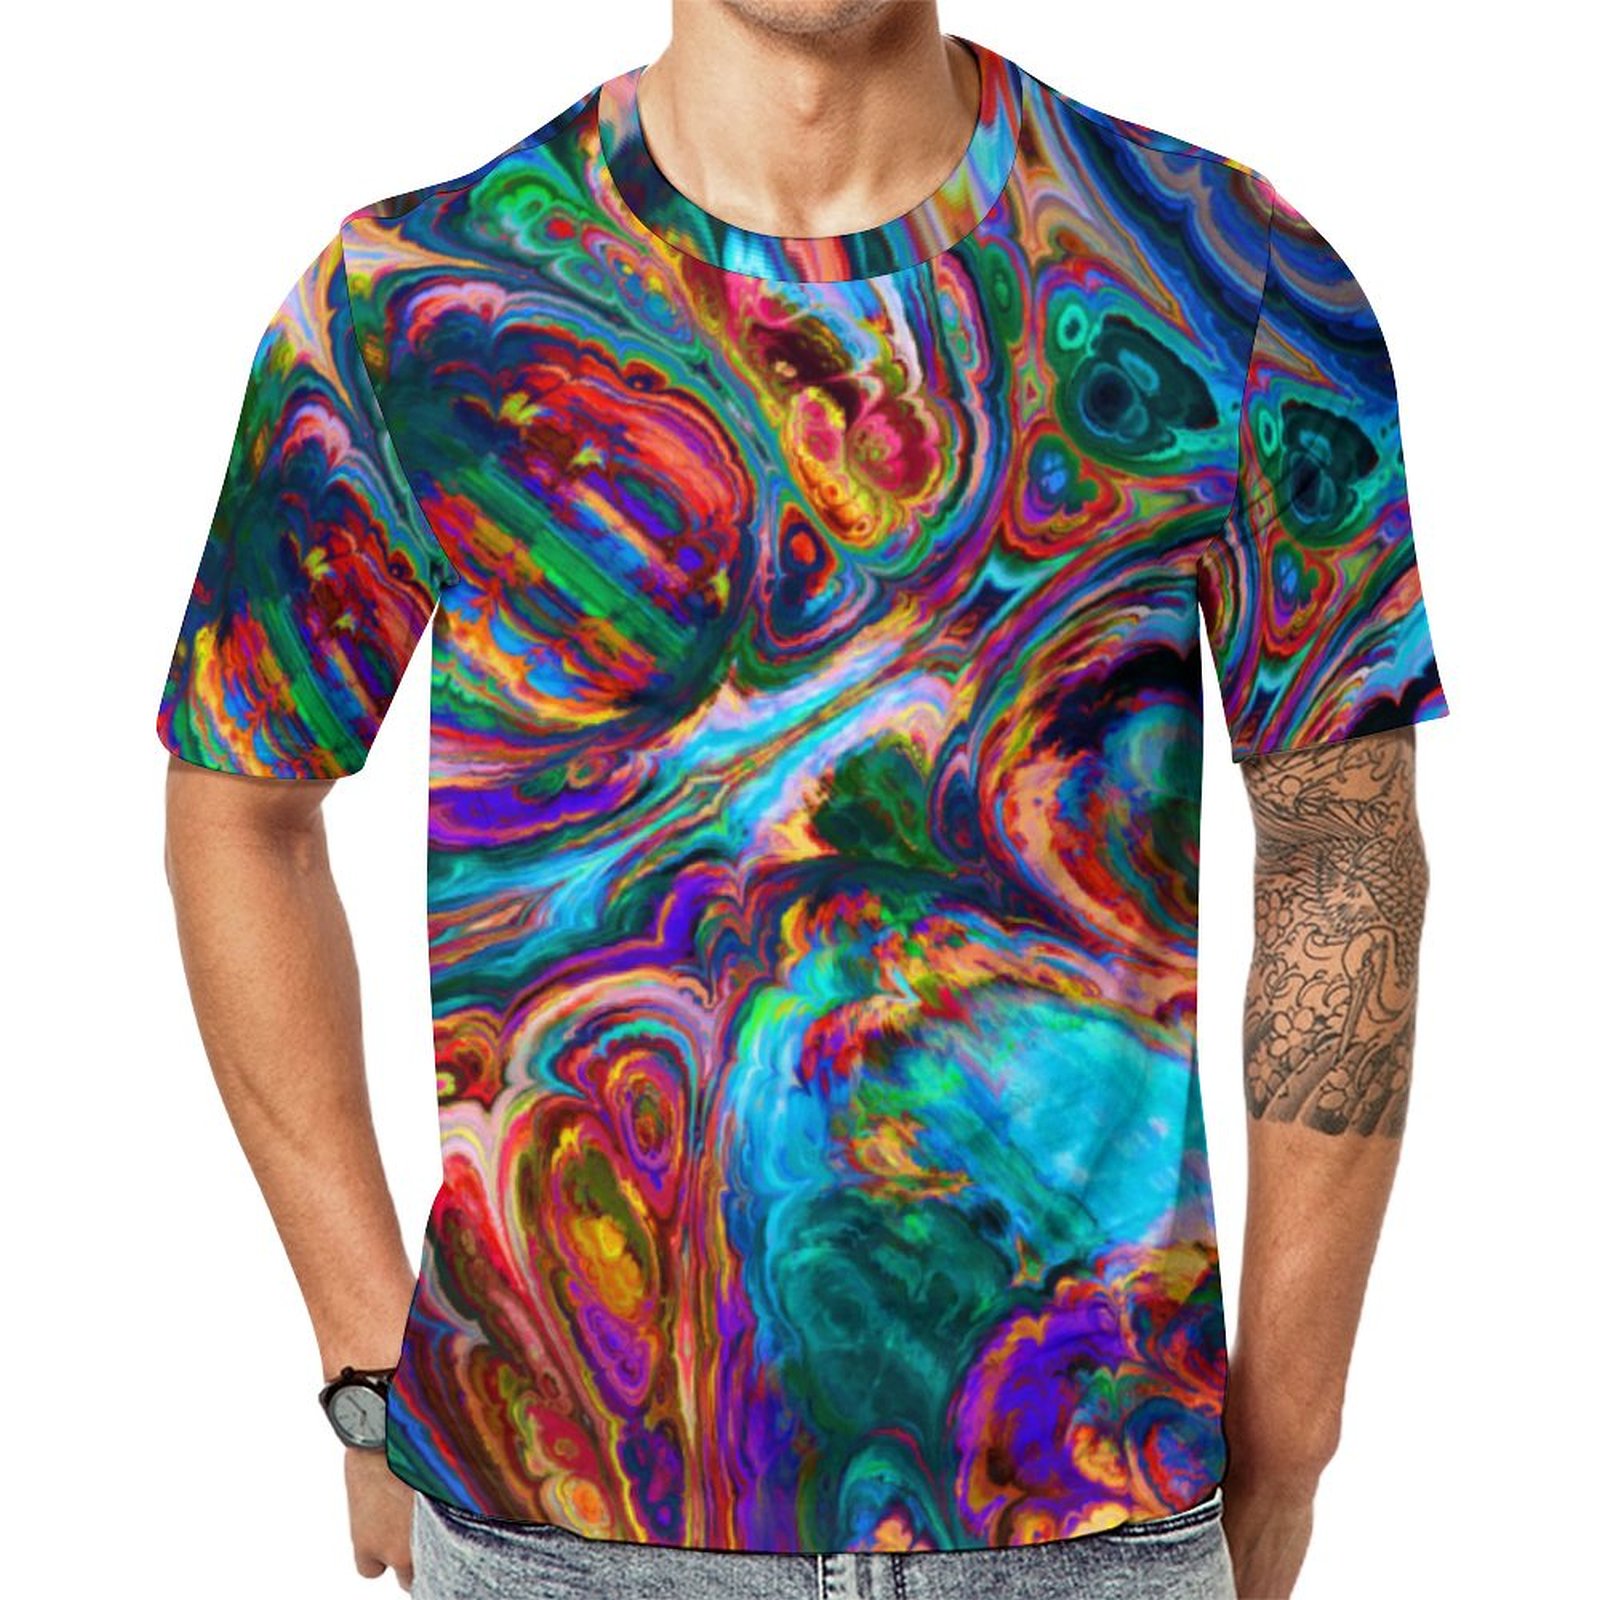 Rainbow Abstract Short Sleeve Print Unisex Tshirt Summer Casual Tees for Men and Women Coolcoshirts